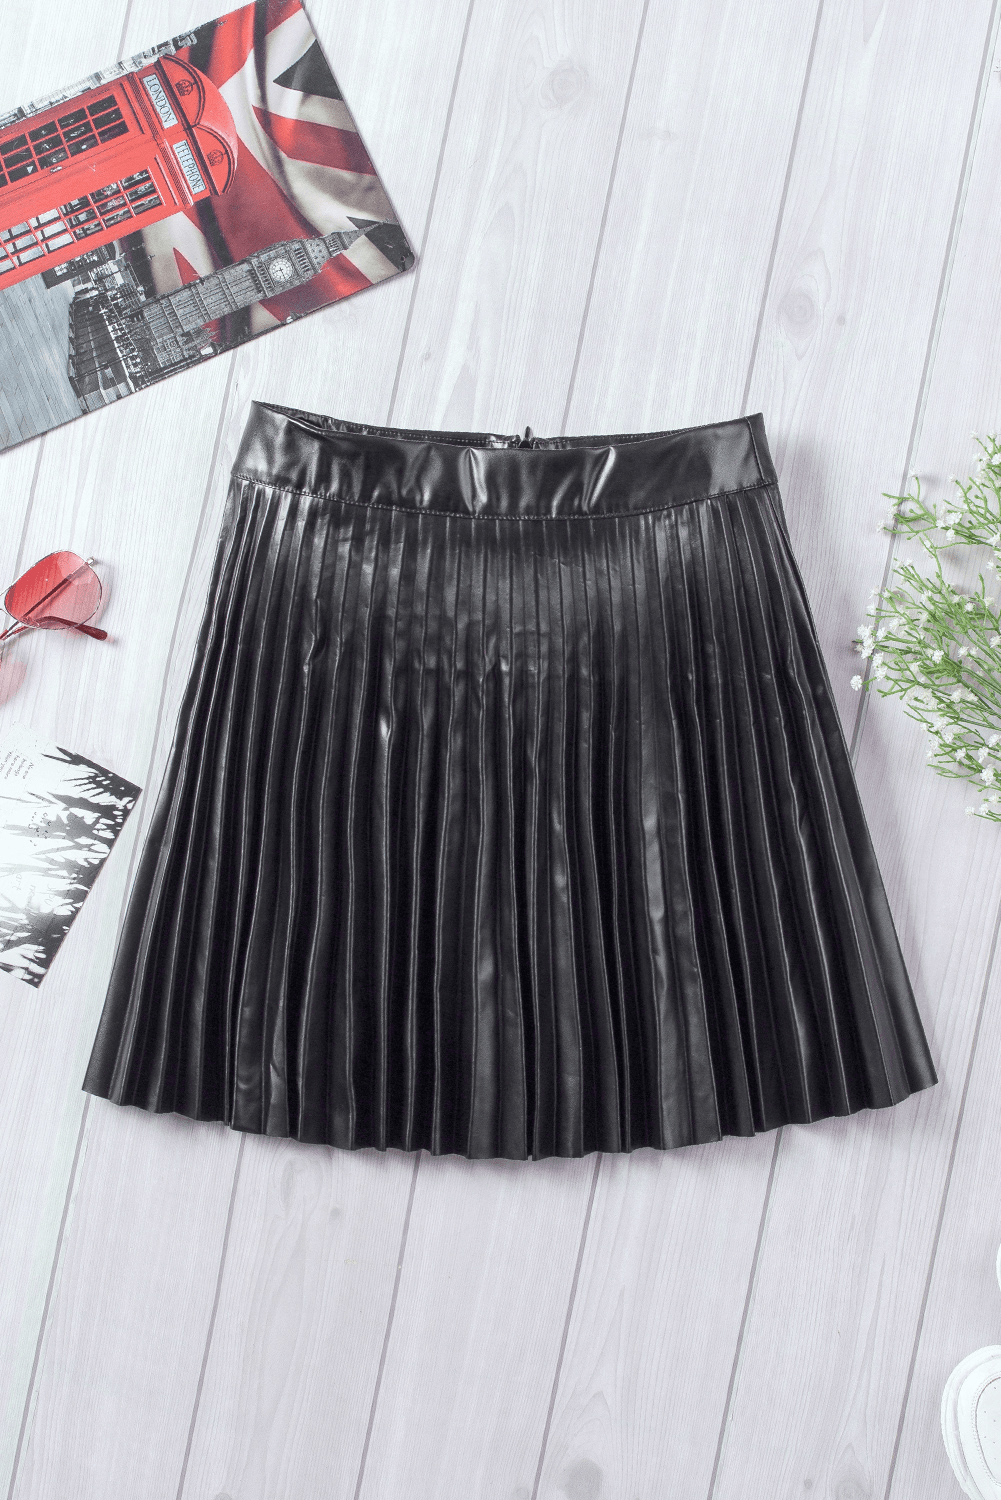 Black Pleated High Waist Mini Skirt - Shah S. Sahota